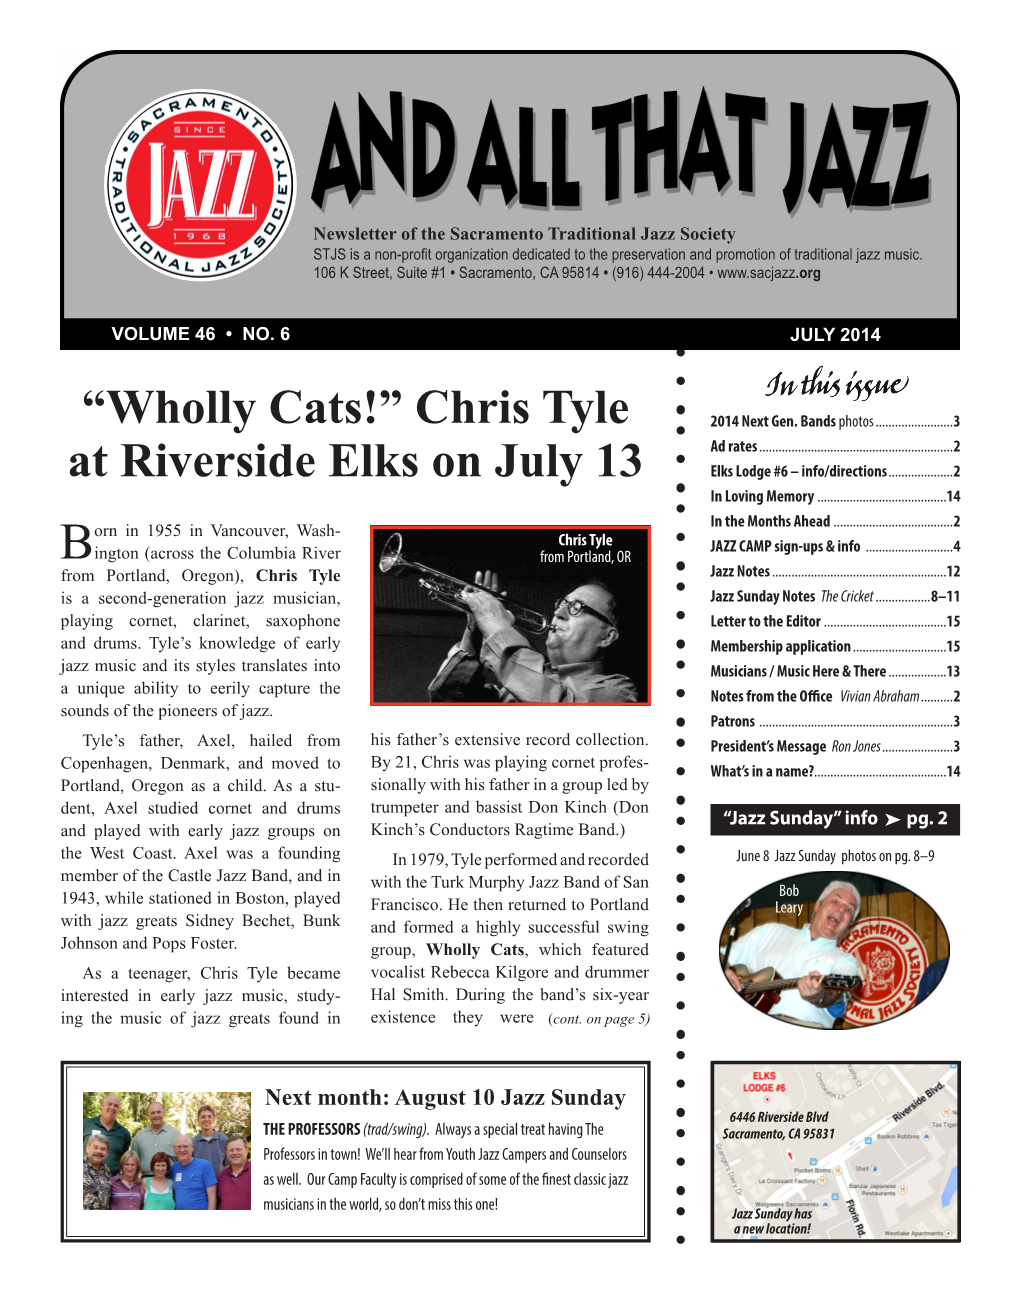 Chris Tyle at Riverside Elks on July 13